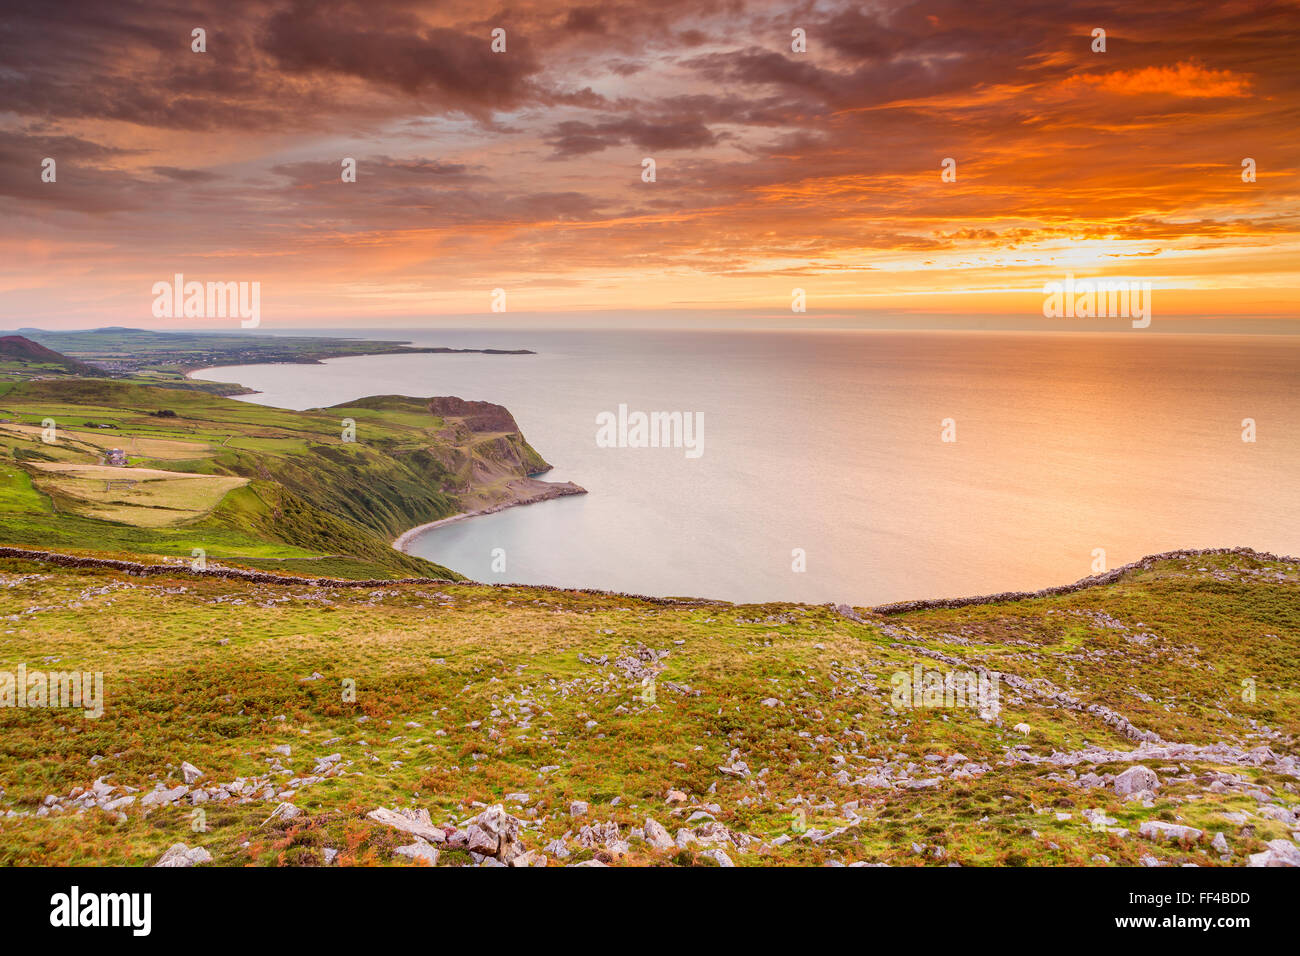 Sunset over Caernarfon Bay, Llithfaen, Gwynedd, Wales, Regno Unito, Europa. Foto Stock